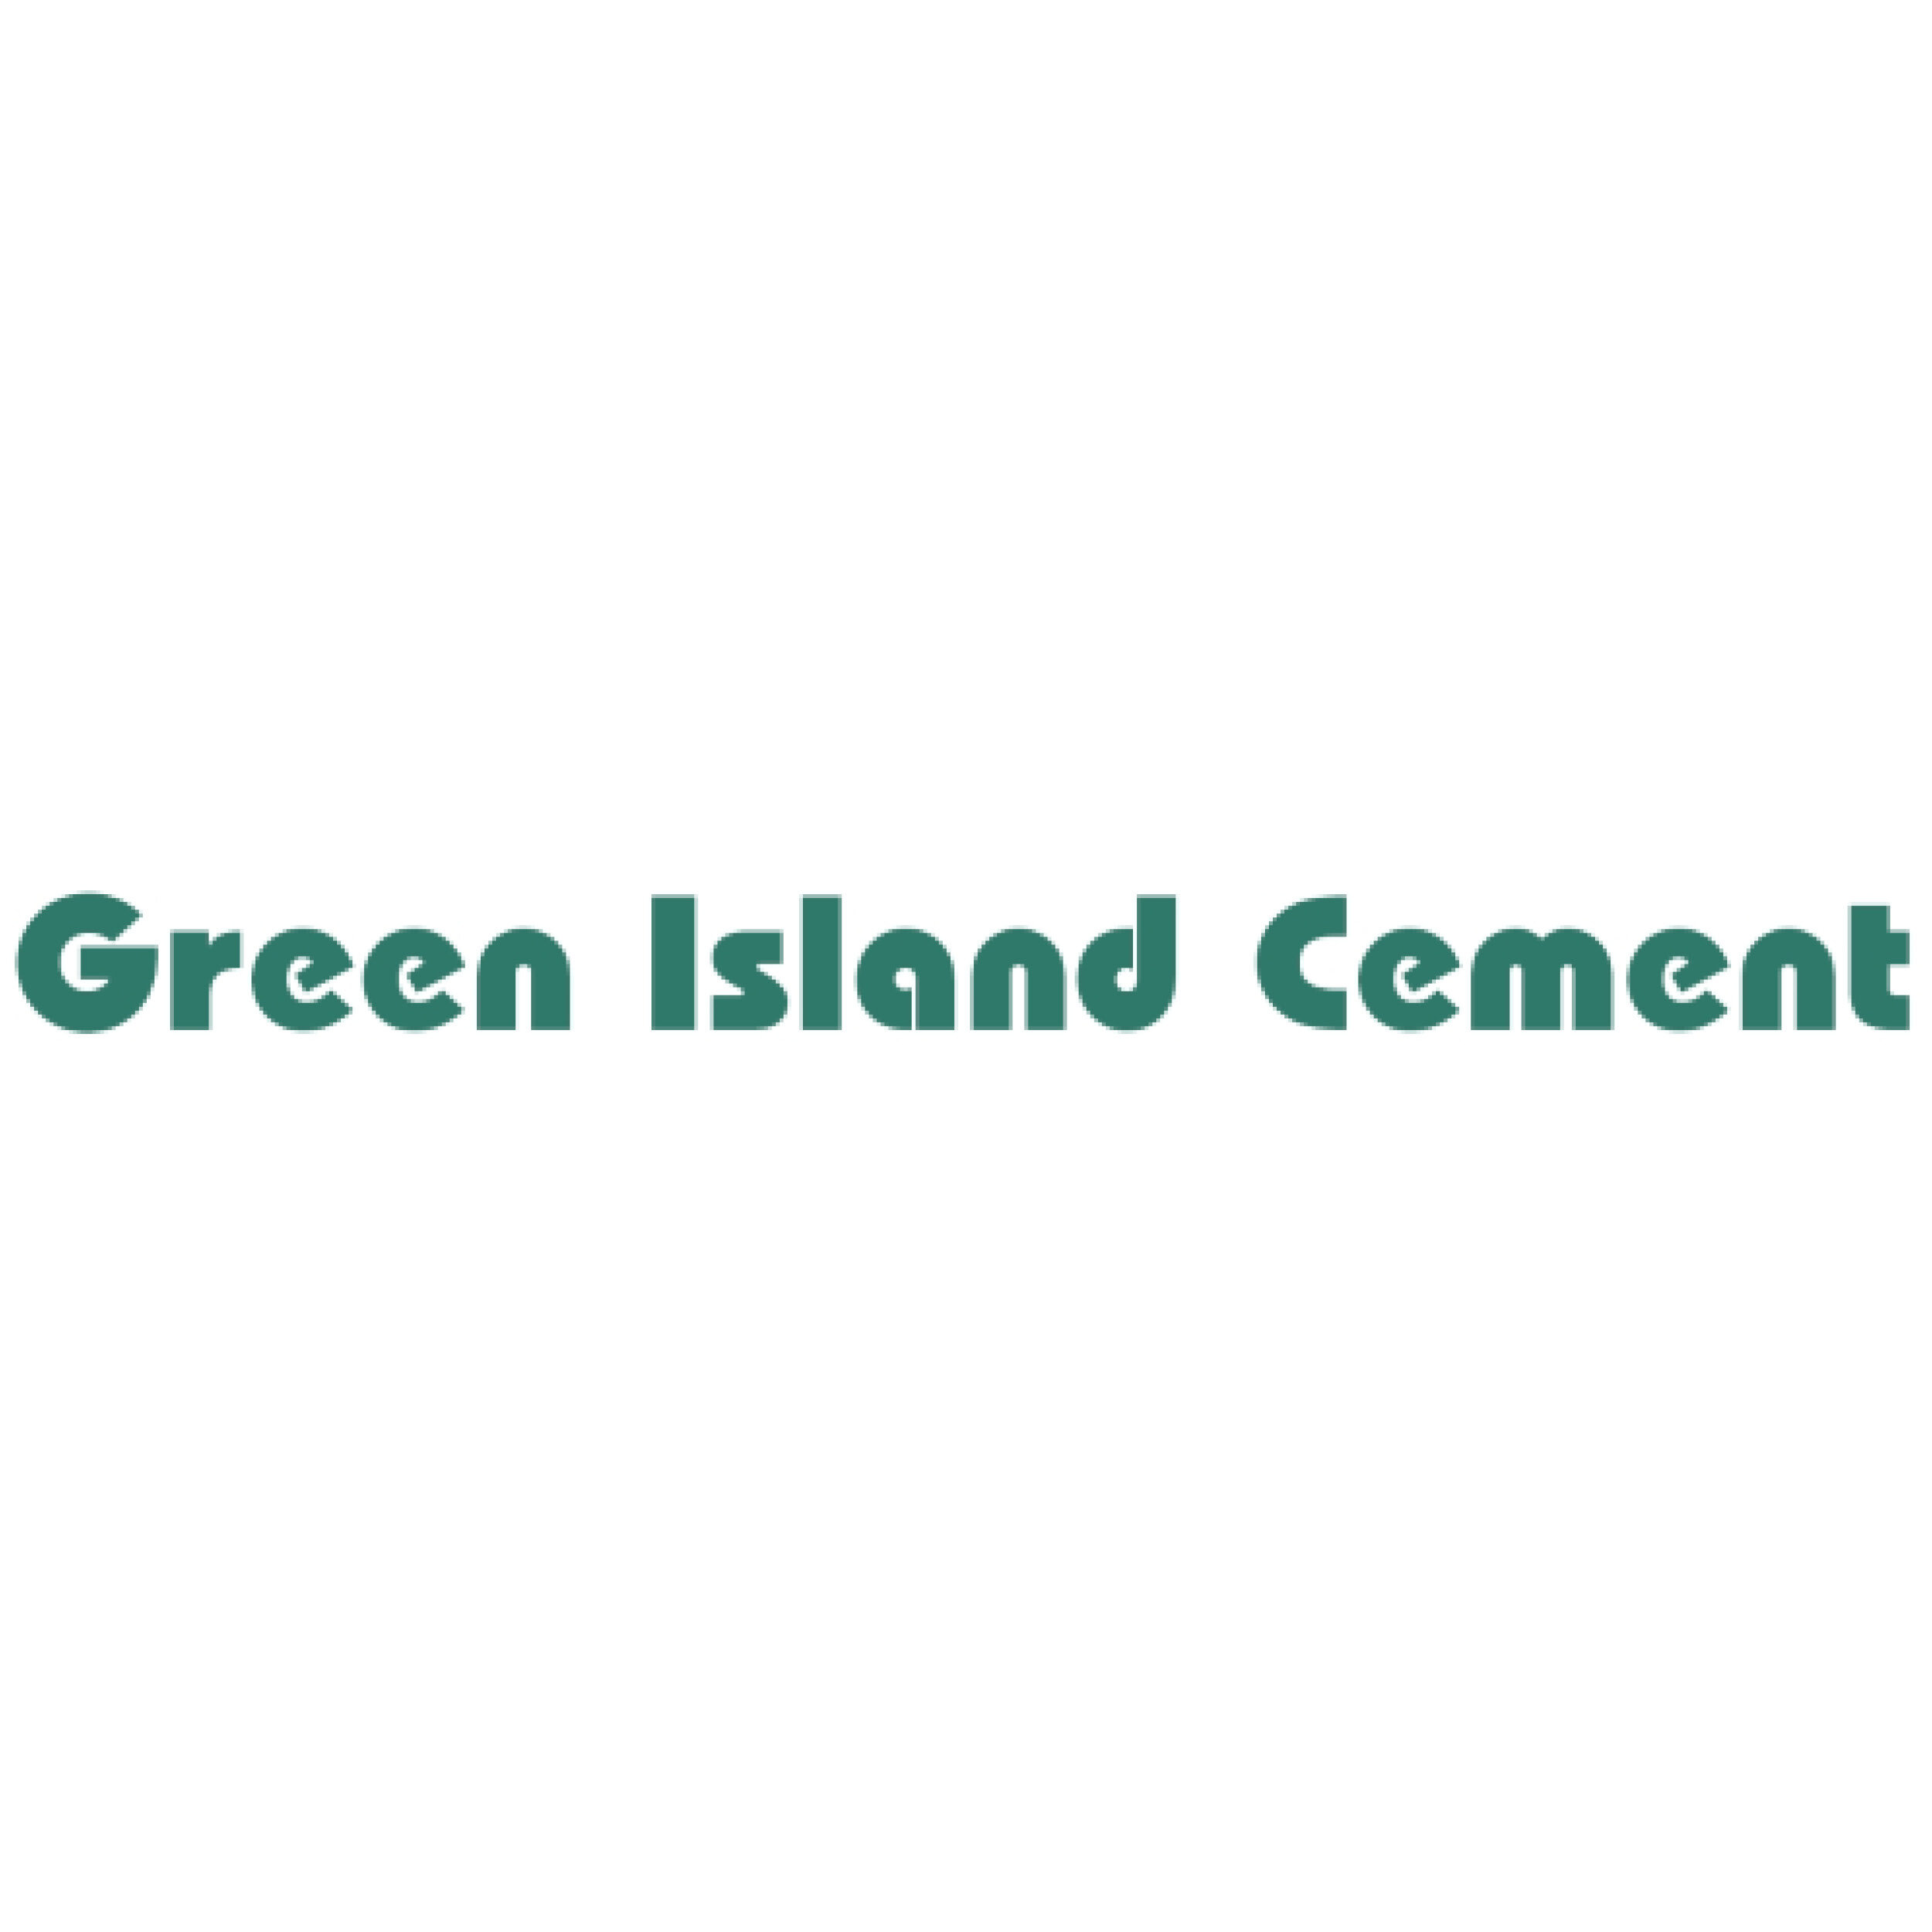 20 Green Island Cement.jpg